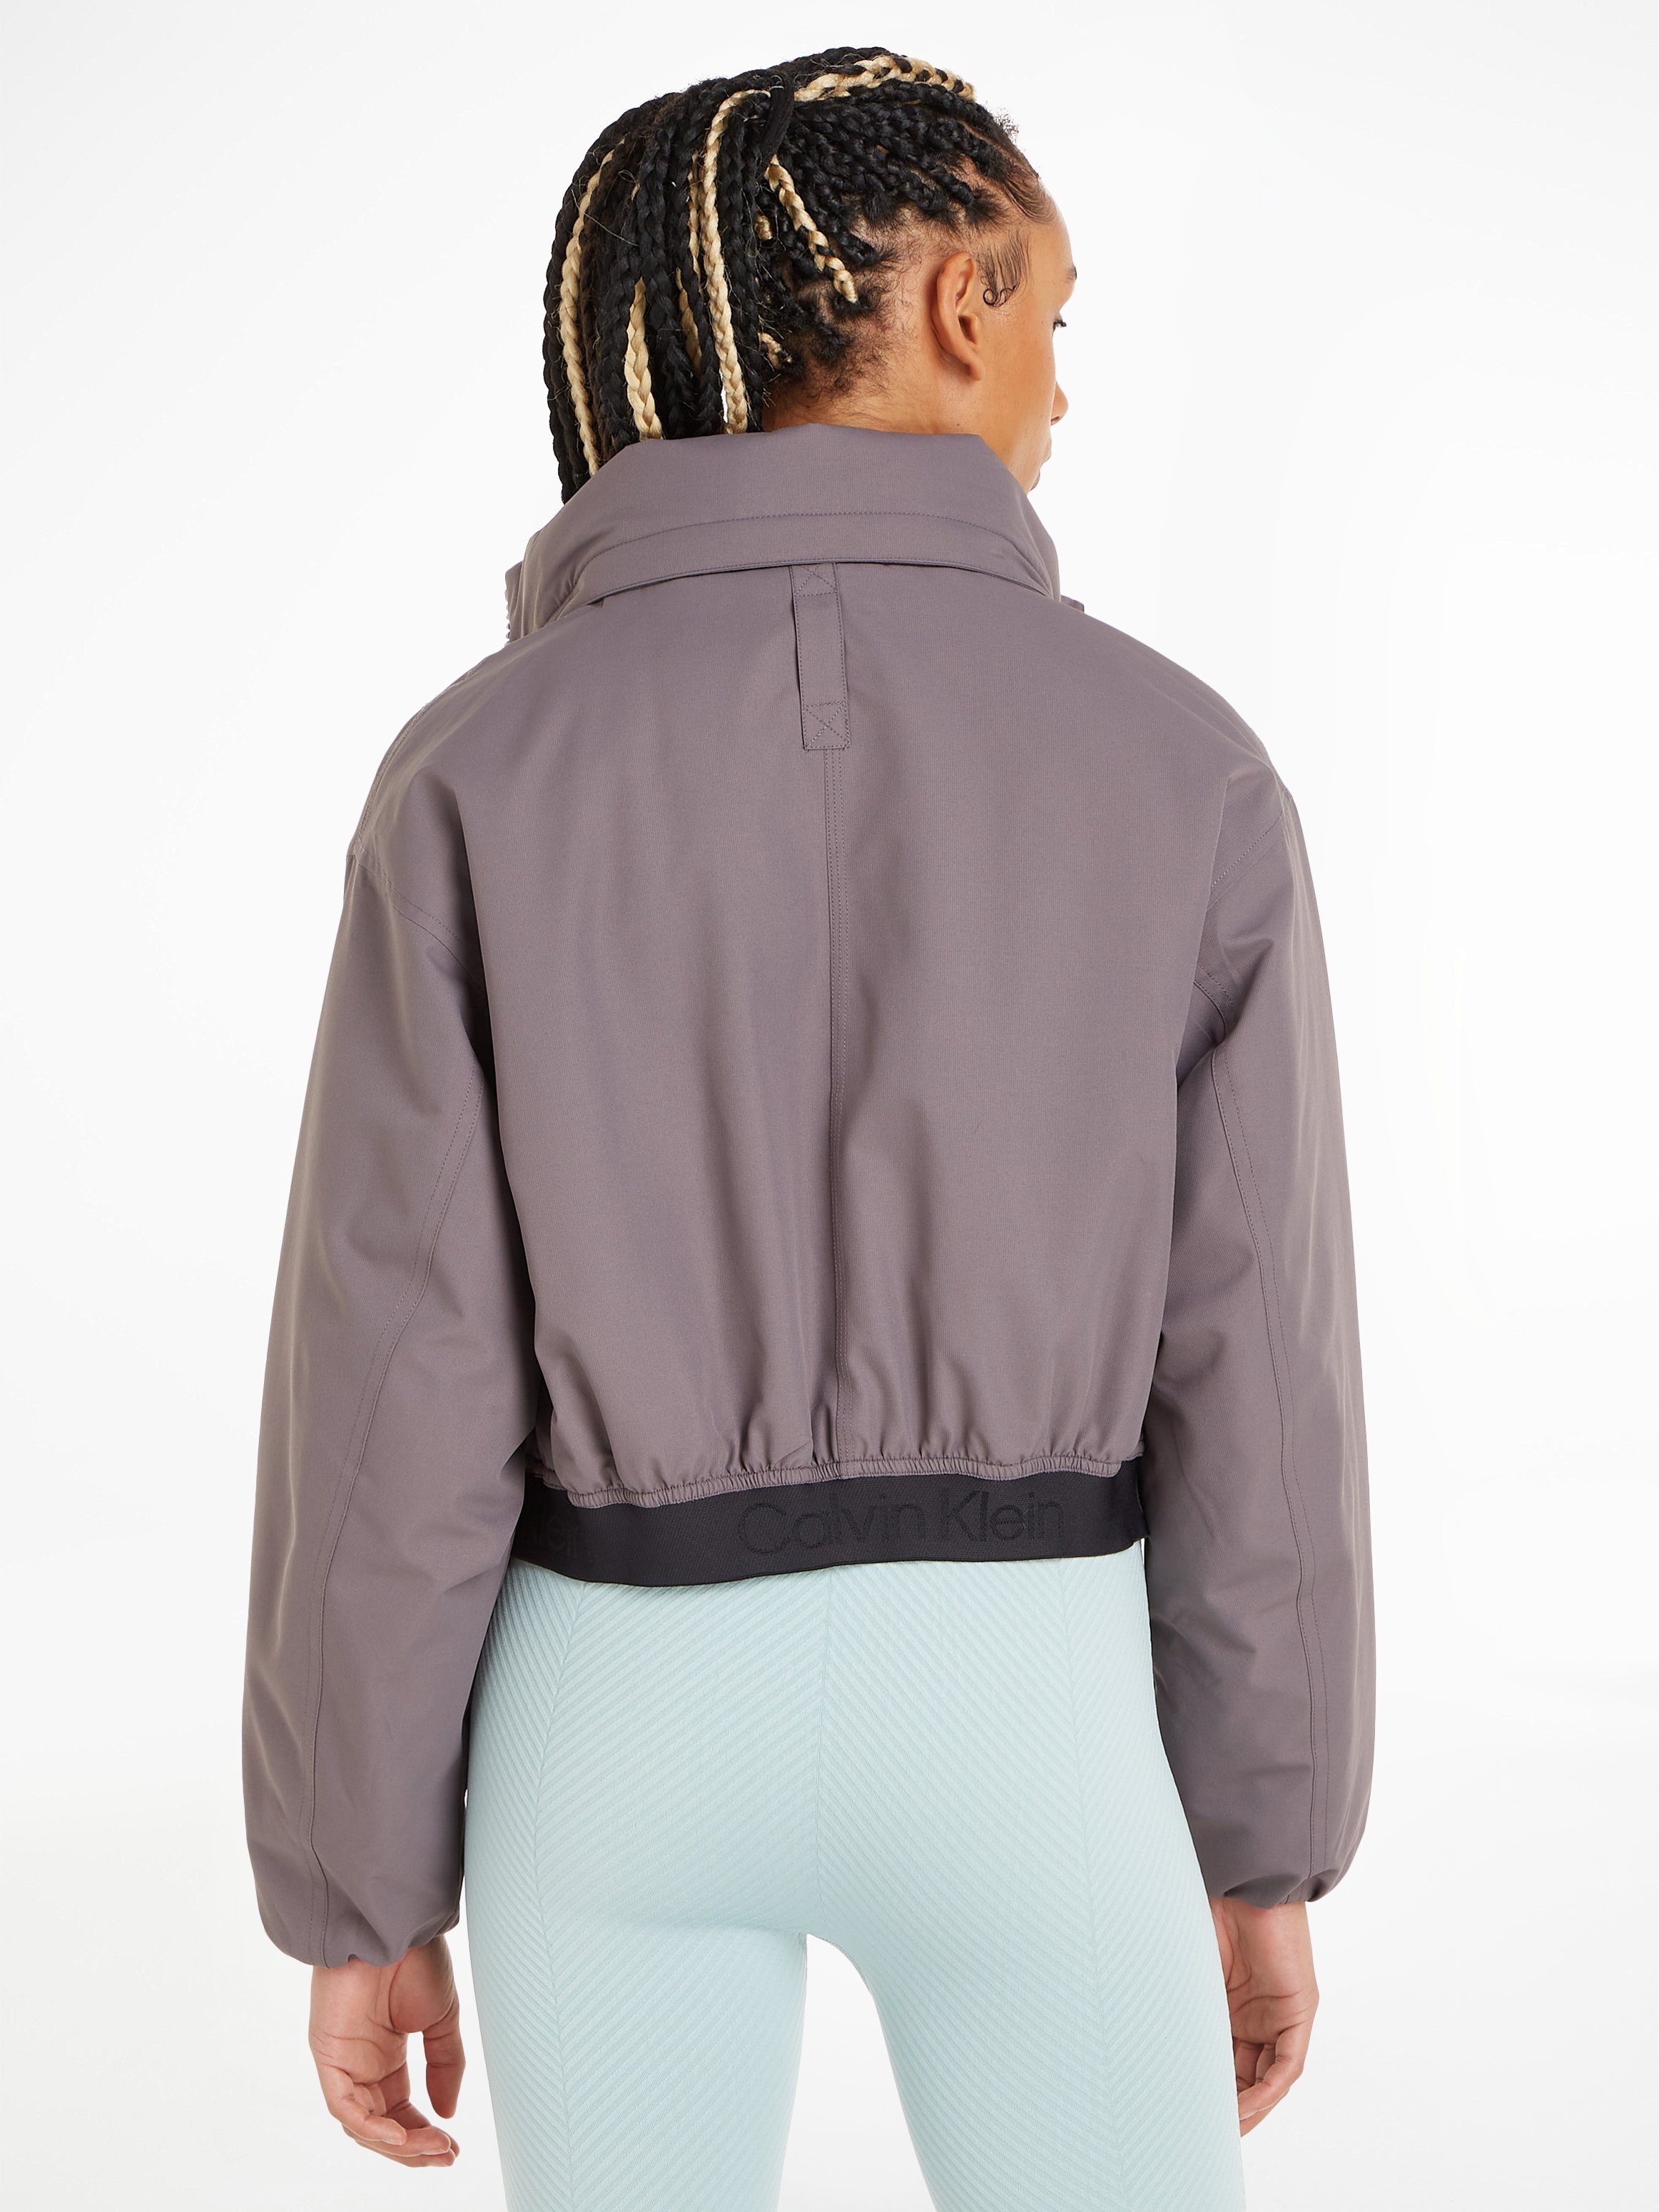 Calvin Klein Sport Outdoorjacke grau Padded PW - Jacket